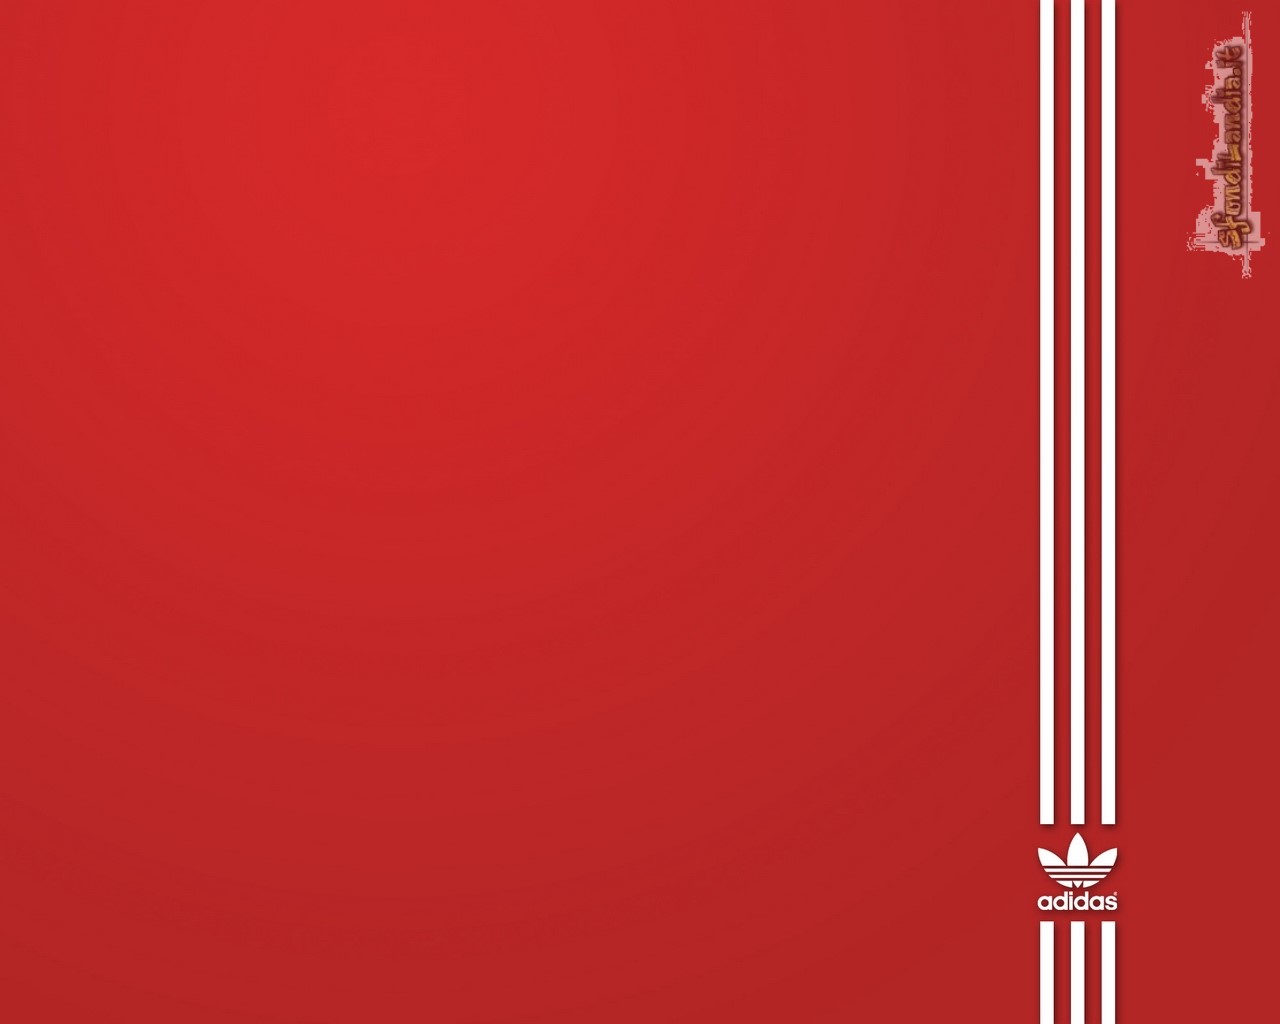 Adidas Red